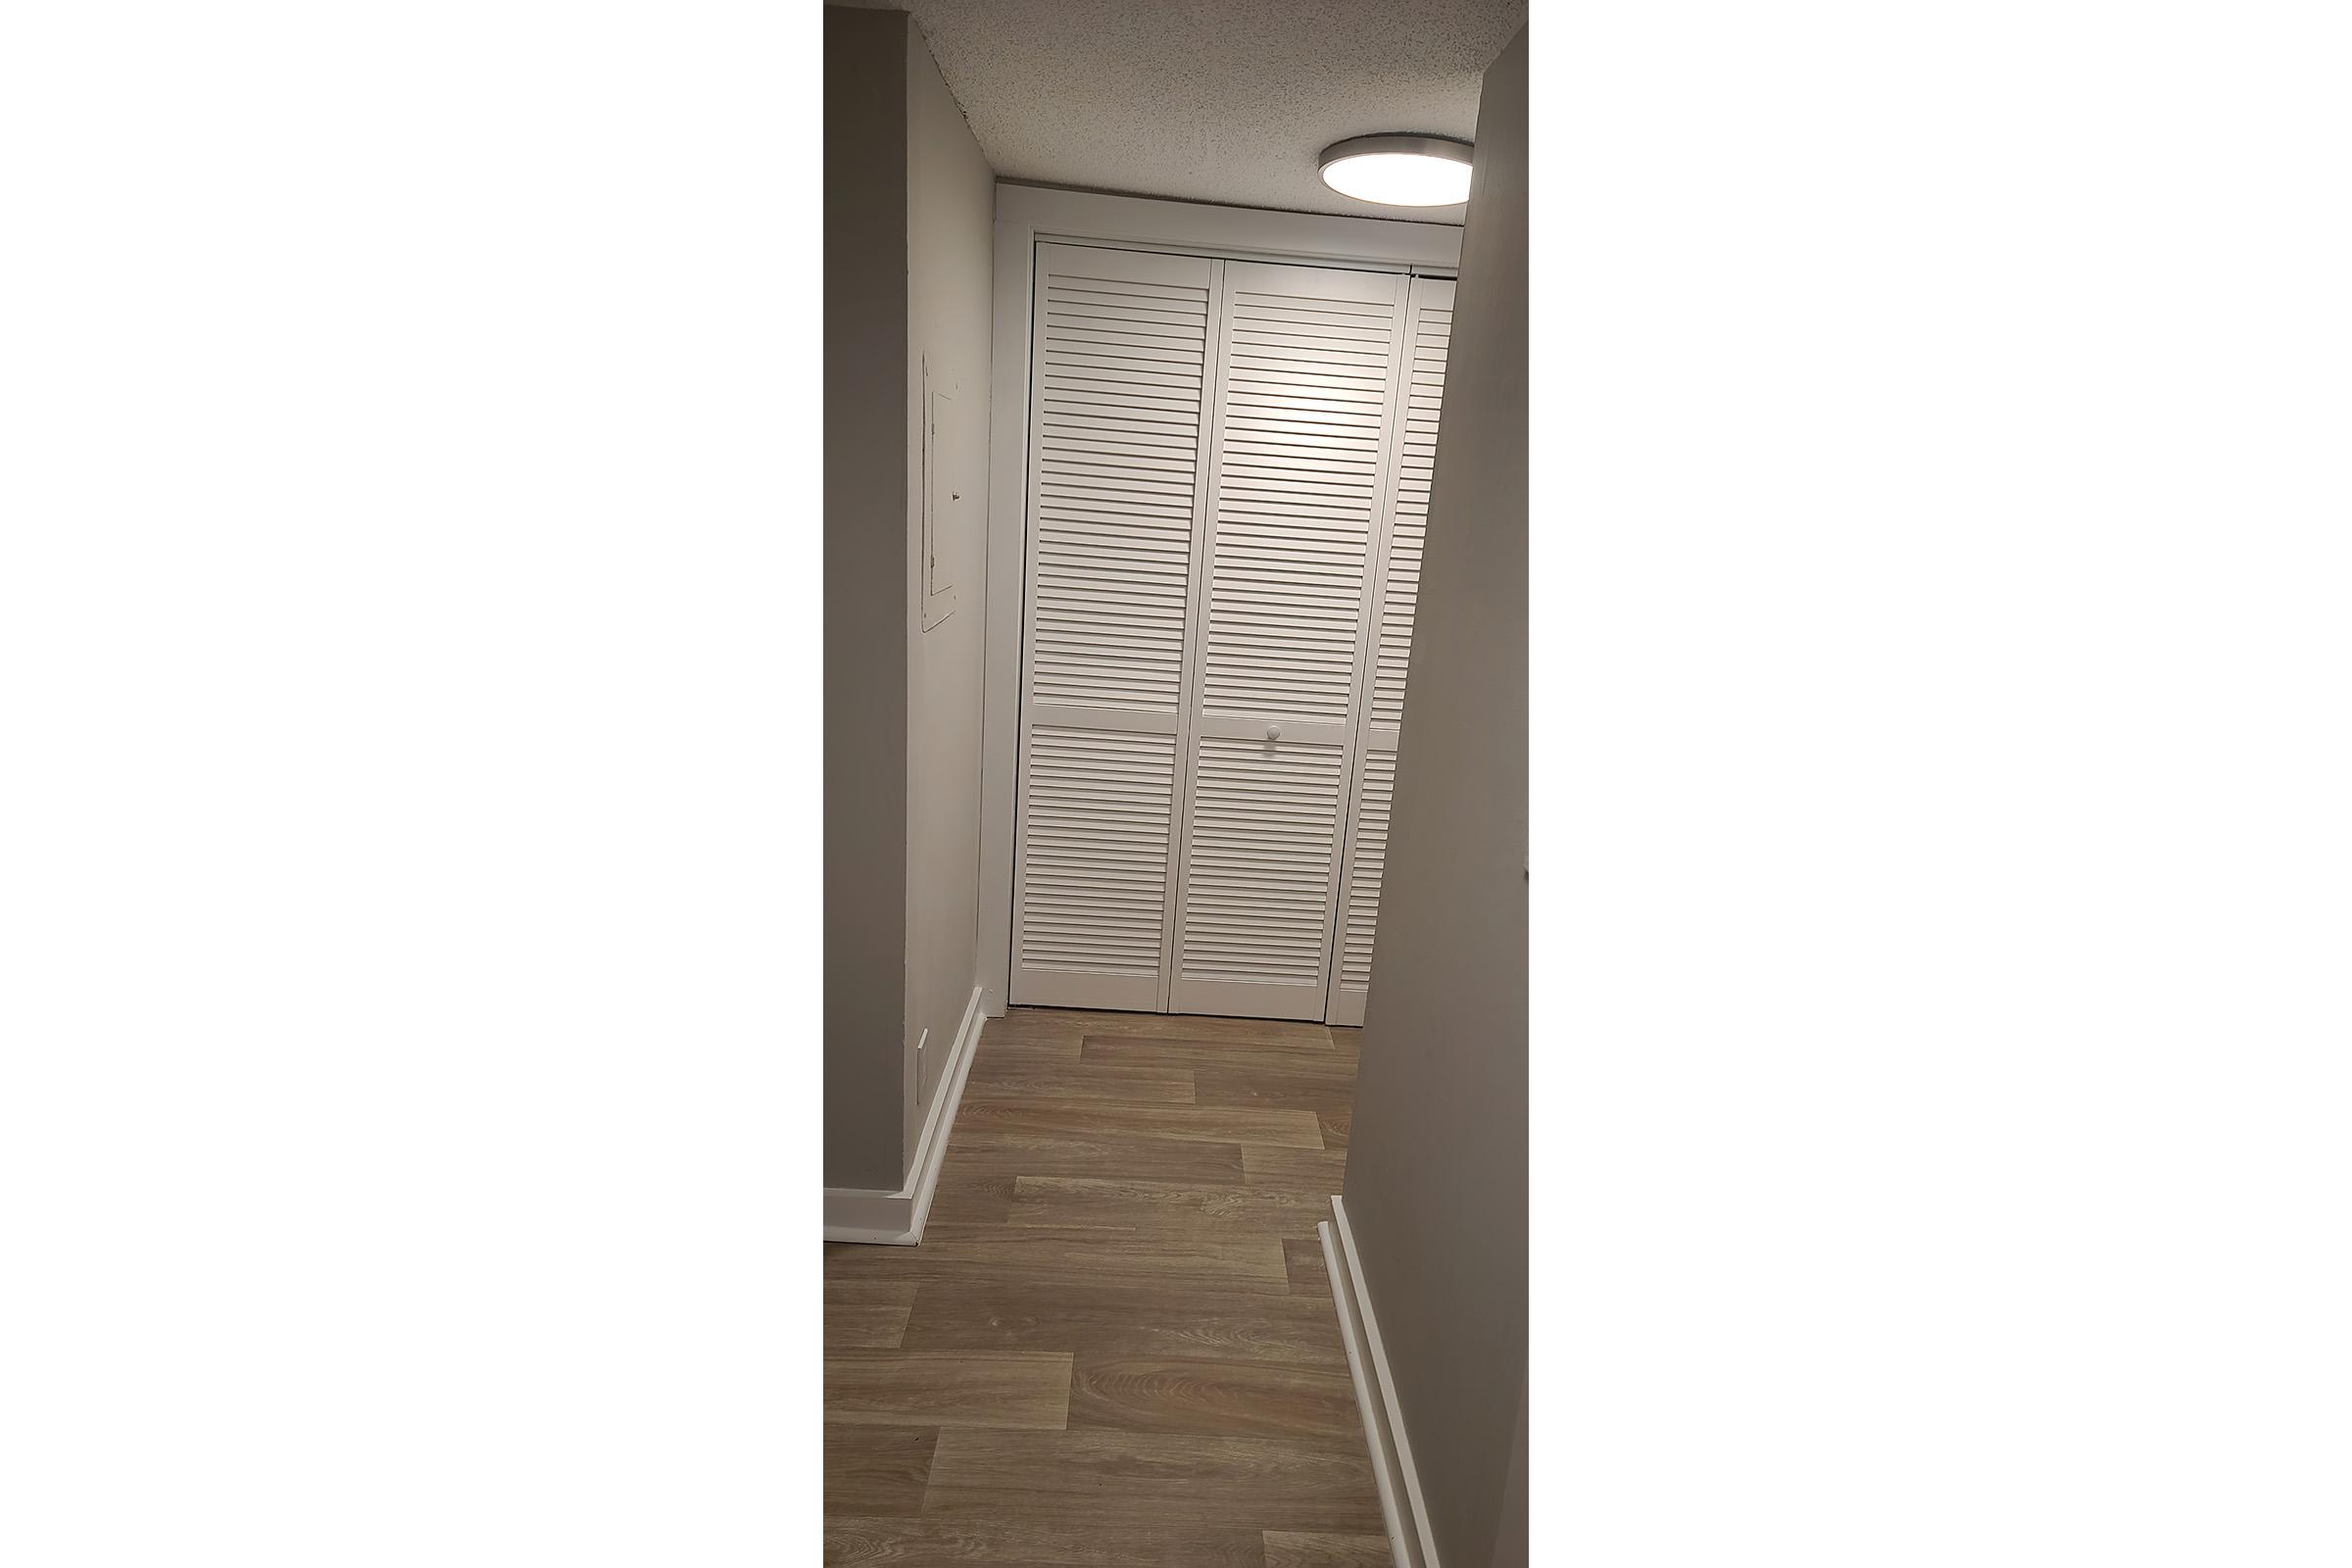 view of hallway closet